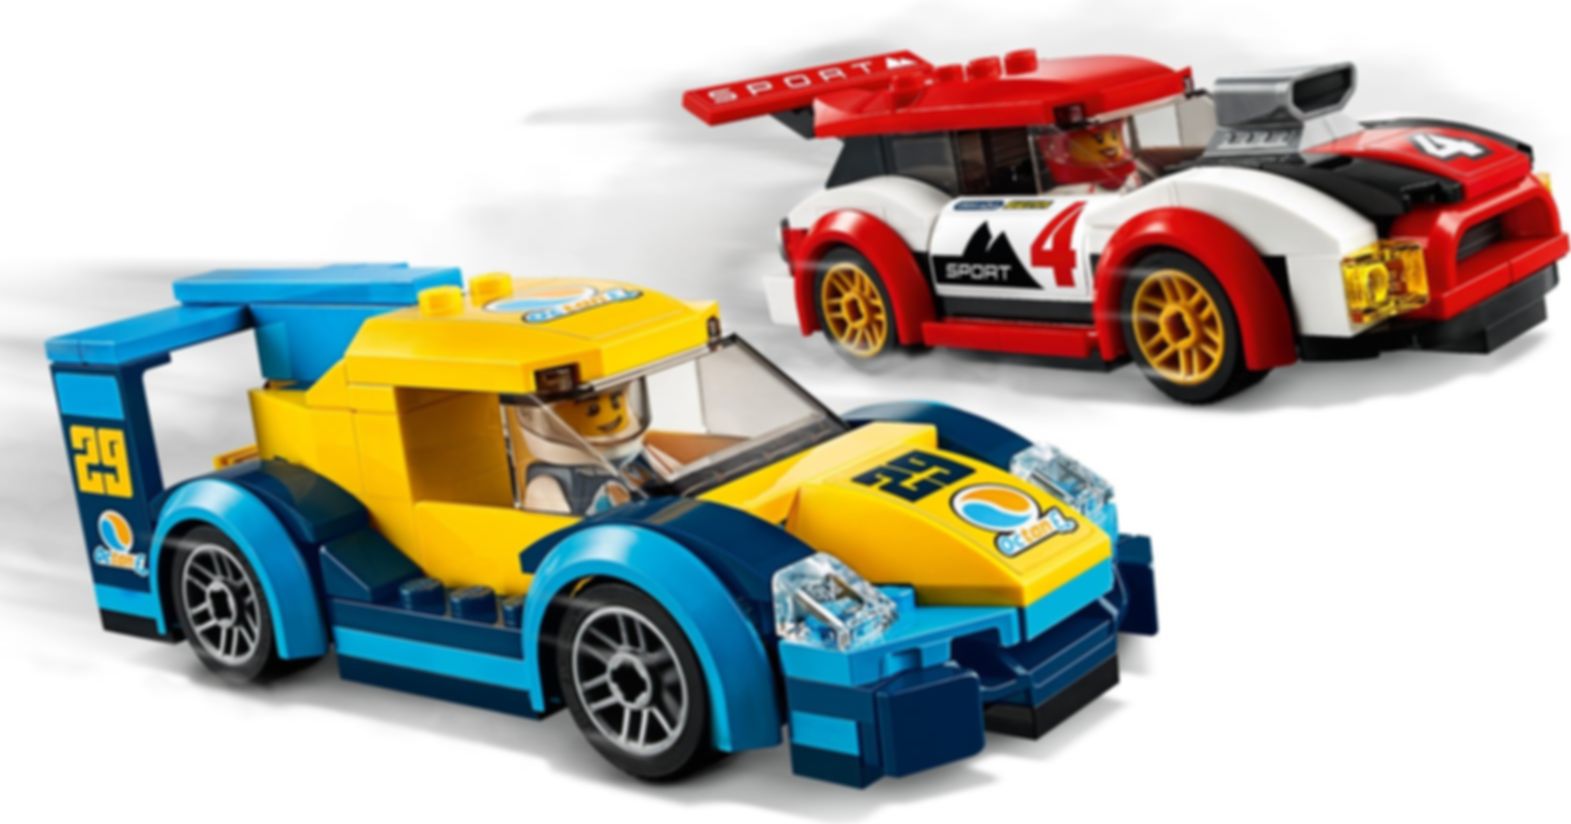 LEGO® City Racing Cars gameplay